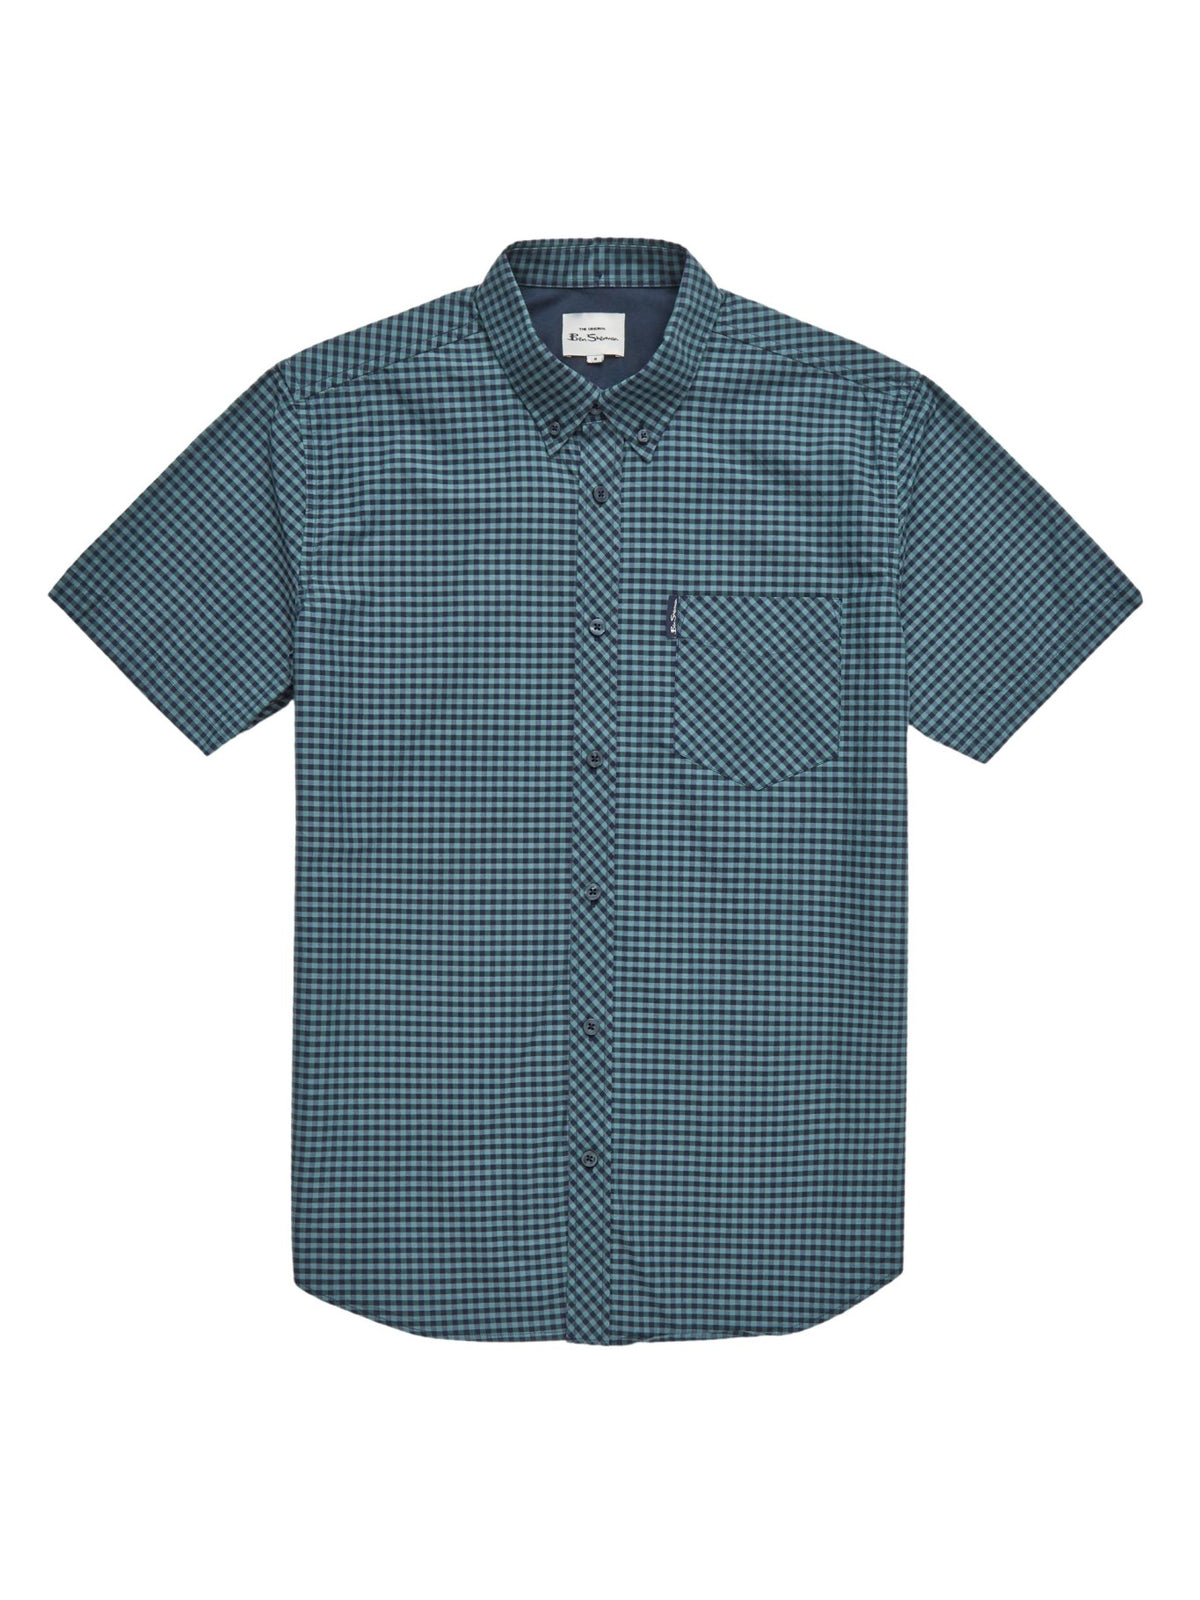 Ben Sherman Mens Signature Gingham Shirt - Short Sleeved, 06, 59142, Dark Emerald